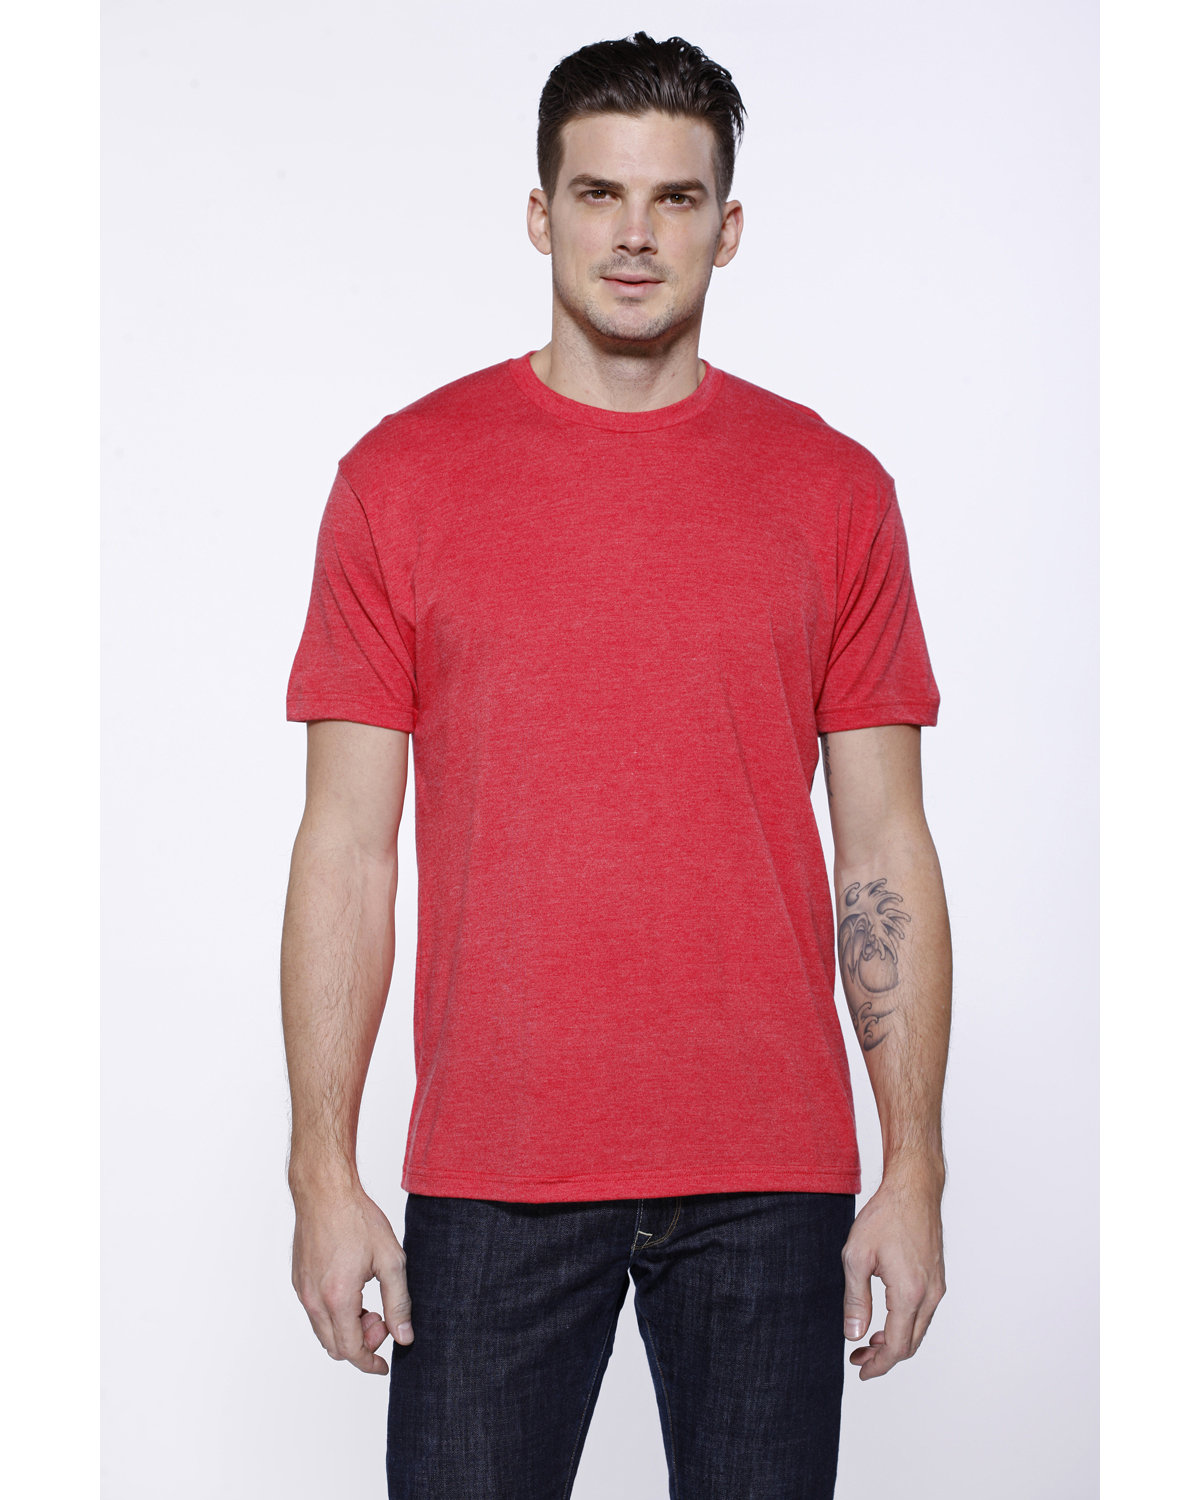 StarTee Men's Triblend Crew Neck T-Shirt VINTAGE RED 